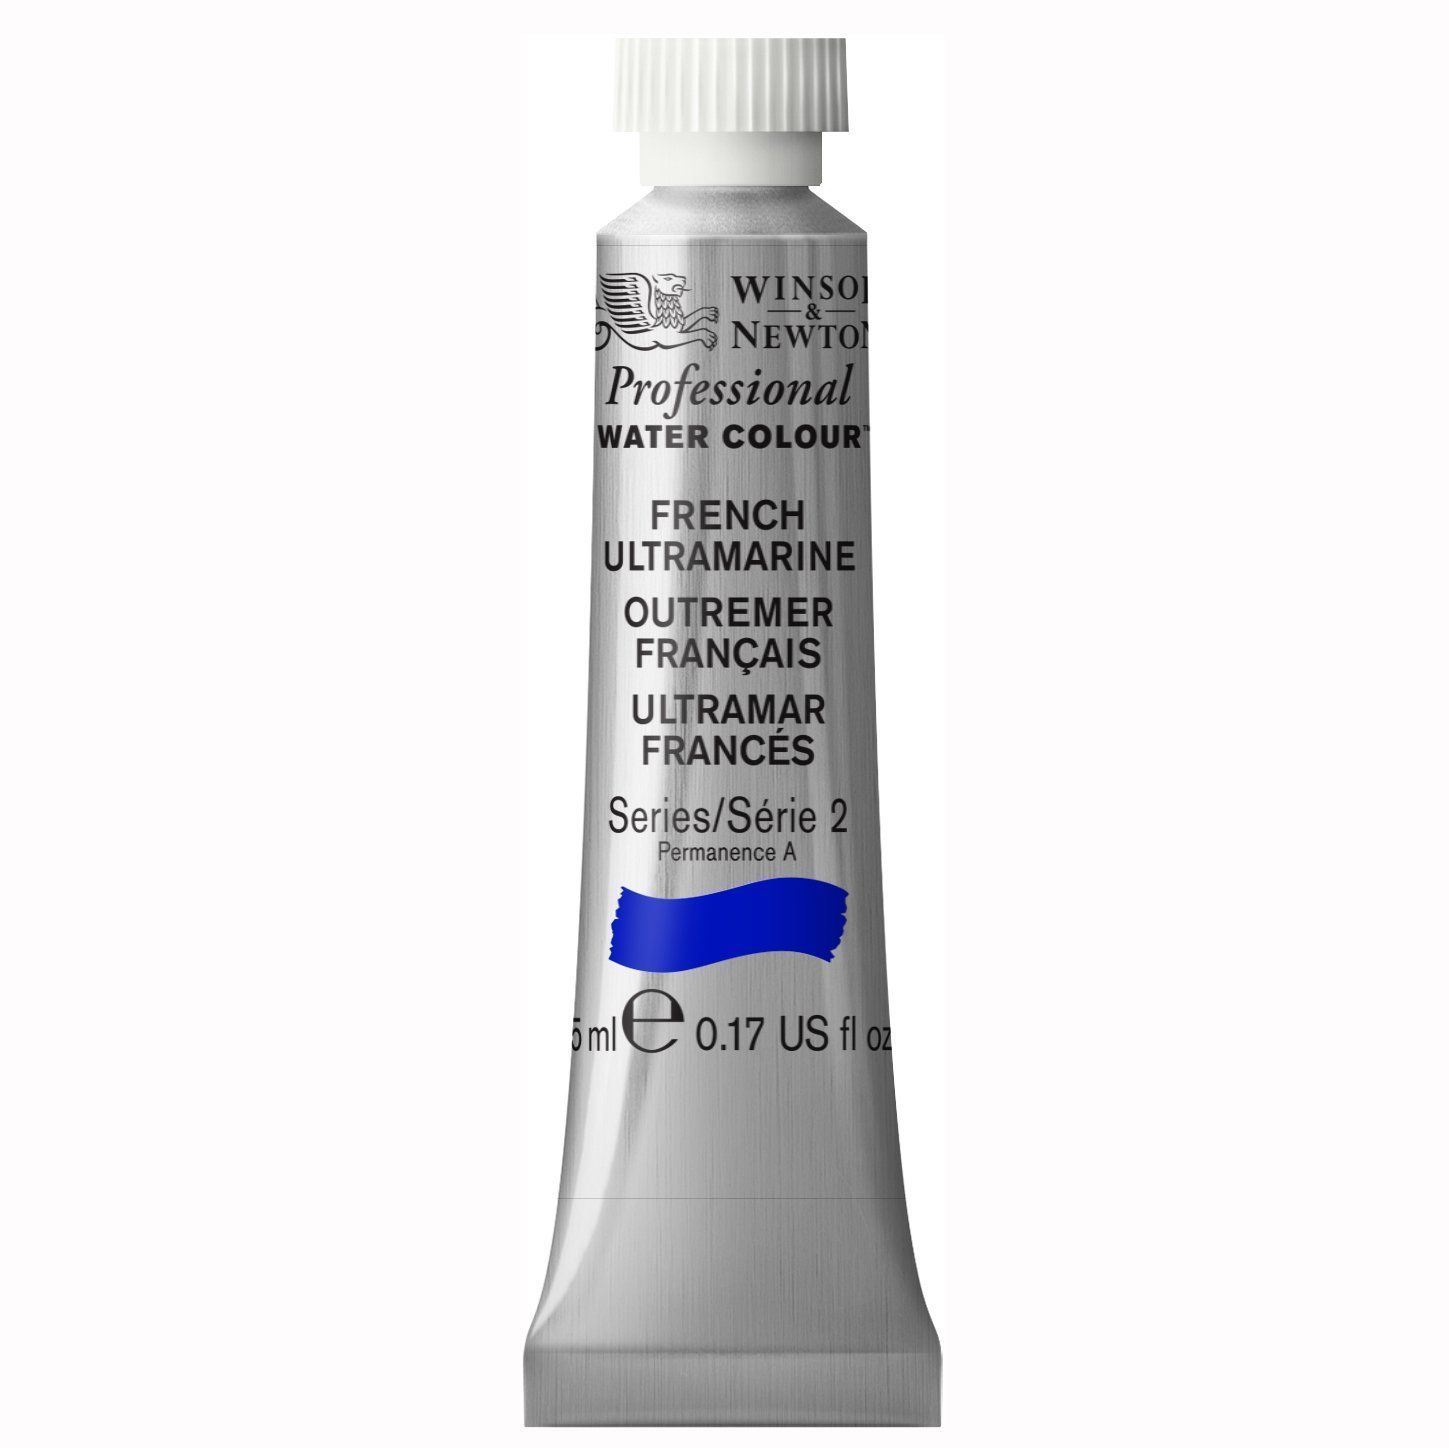 Winsor & Newton Watercolour Paint - French Ultramarine 5ml